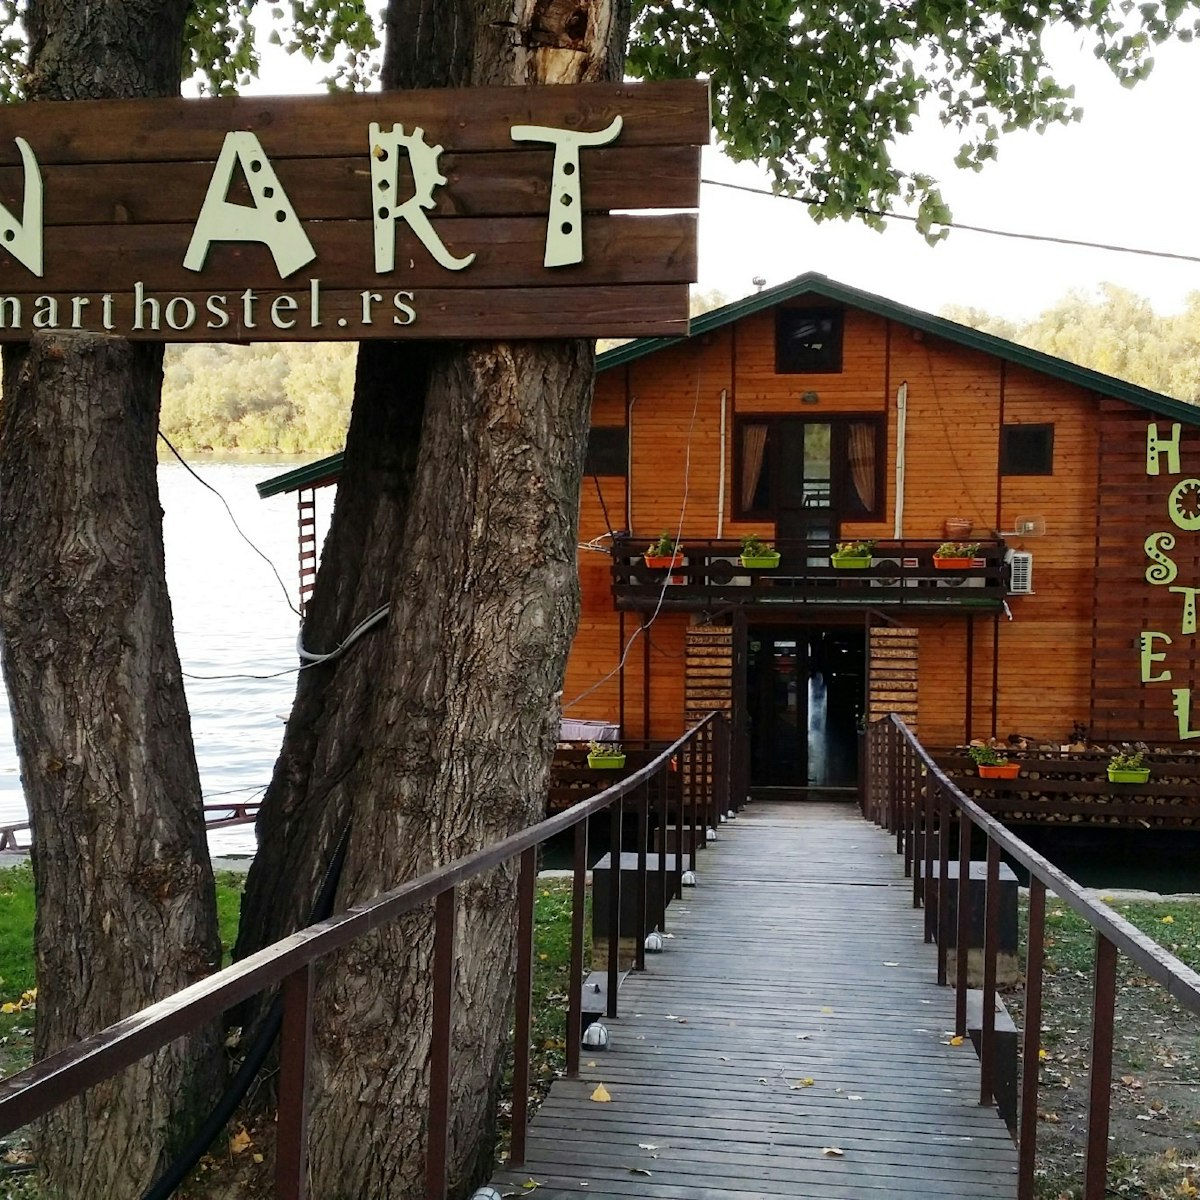 San Art Floating Hostel, a house-raft on the Danube